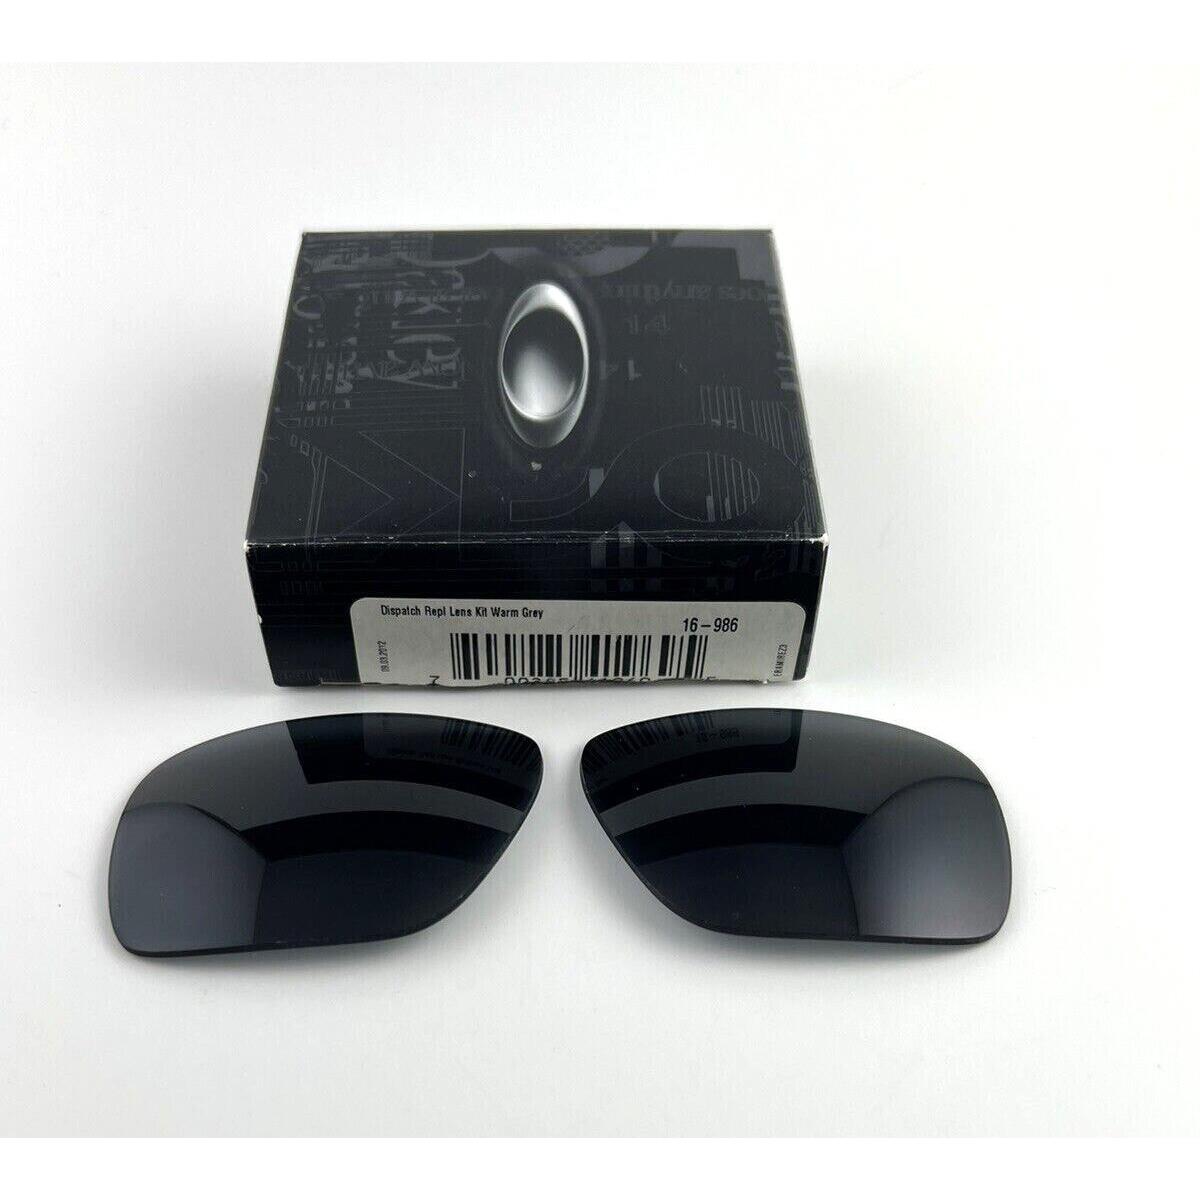 Oakley Oem Dispatch Replacement Lens Kit Grey 16-986